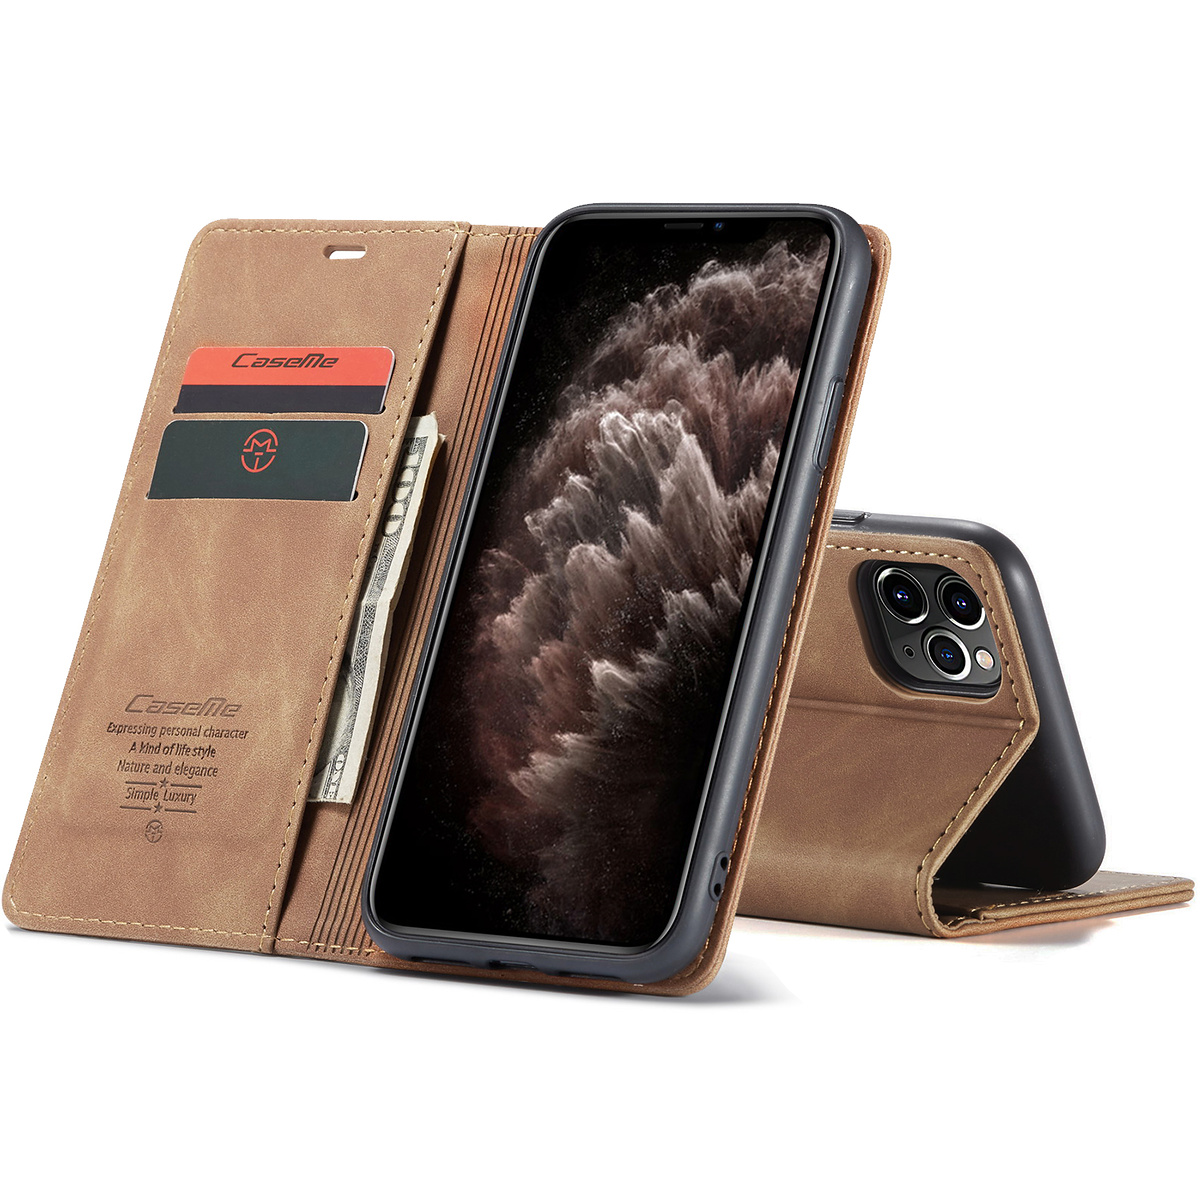 CaseMe plånboksfodral till iPhone 11 Pro, brun